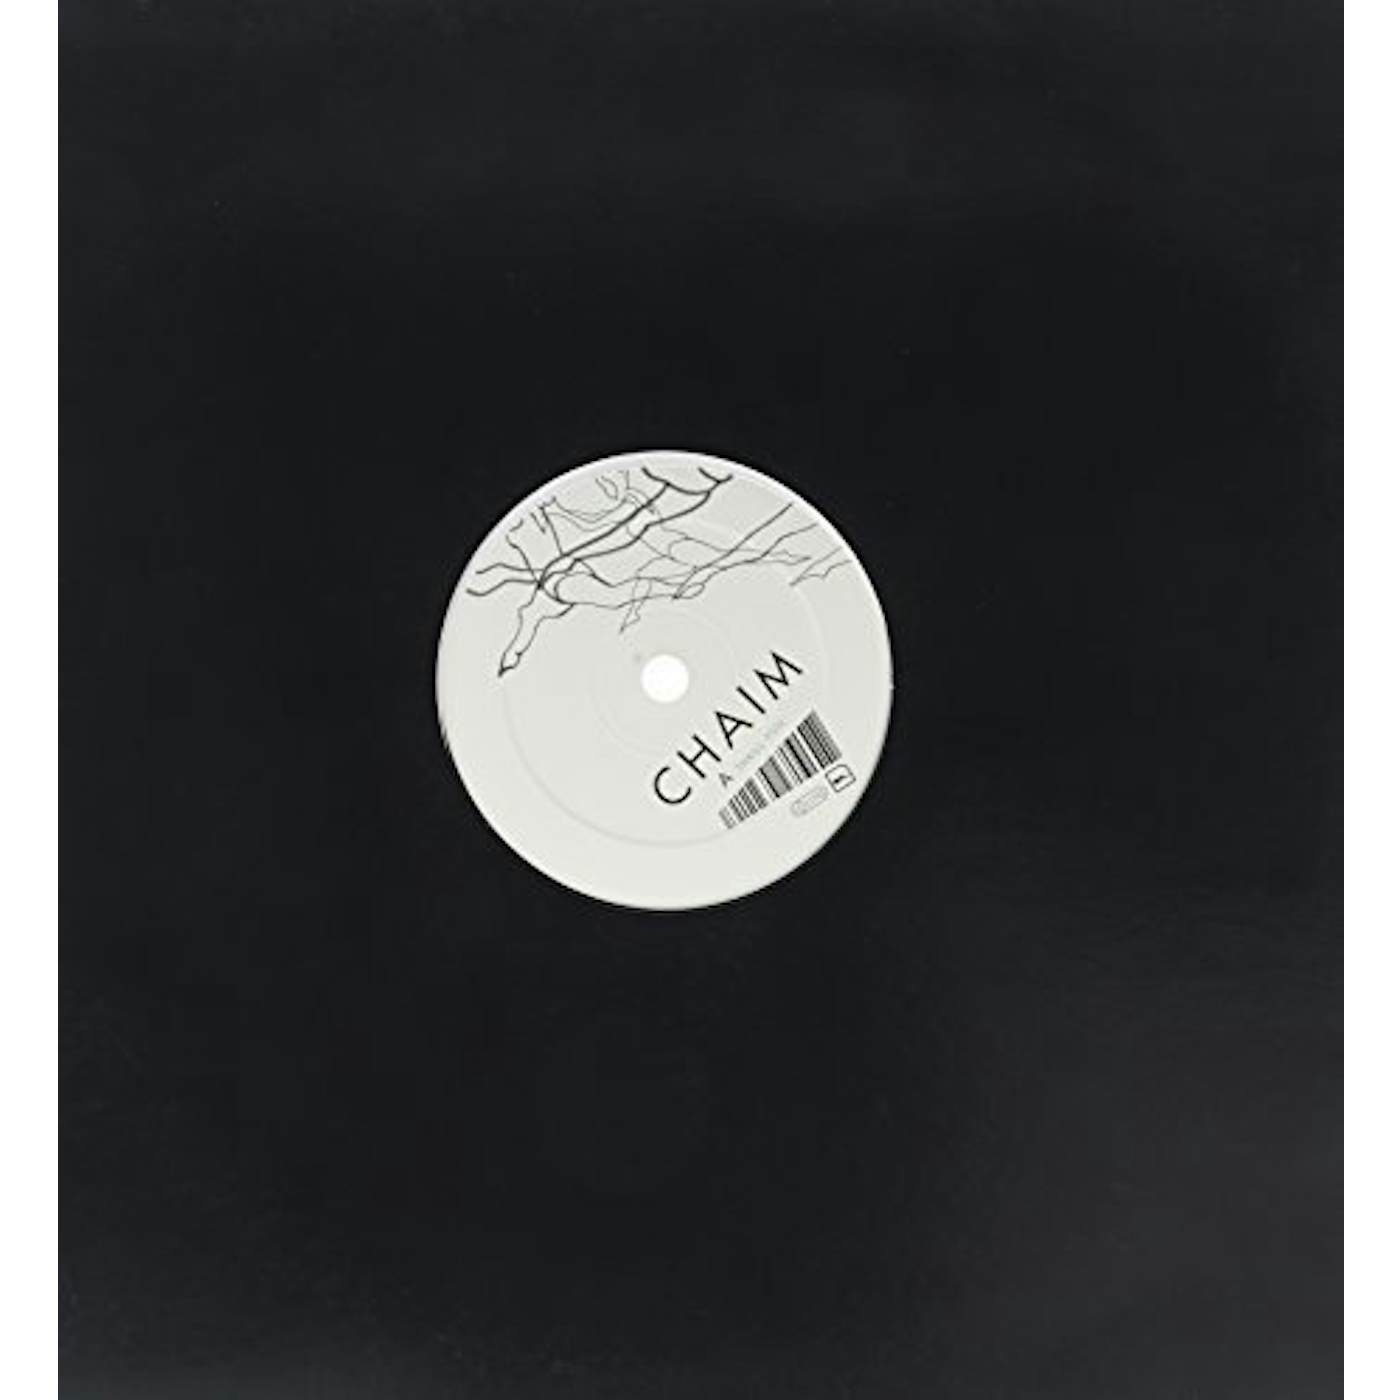 Chaim Thrill You Vinyl Record